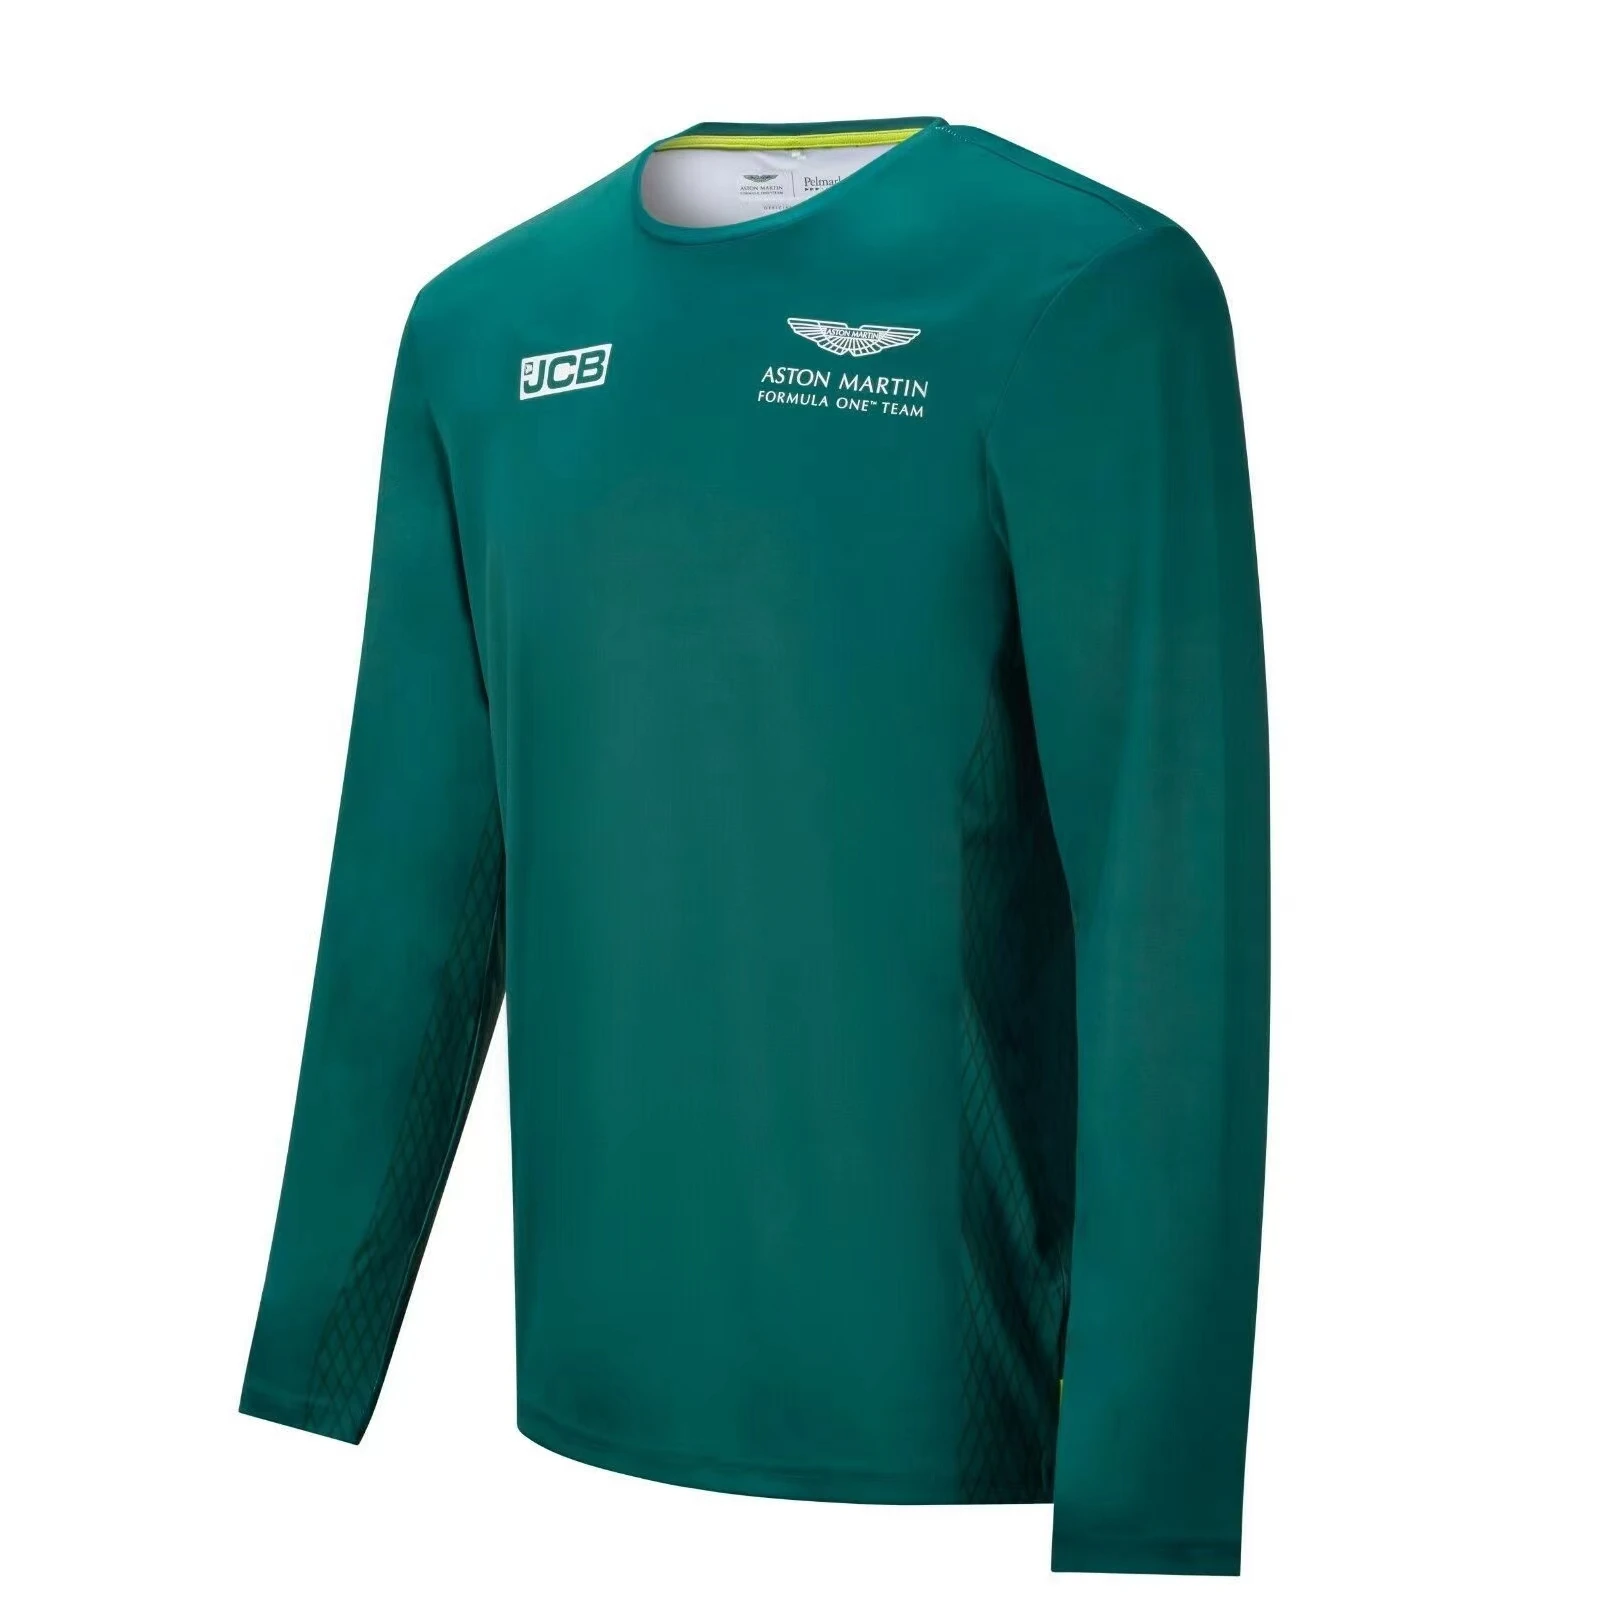 Купи Aston Martin T-shirt Racing F1 Formula One Racing Team 2022 Hot Fashion 3D Print Green Quick Dry Breathable Long Sleeve T-Shirt за 205 рублей в магазине AliExpress